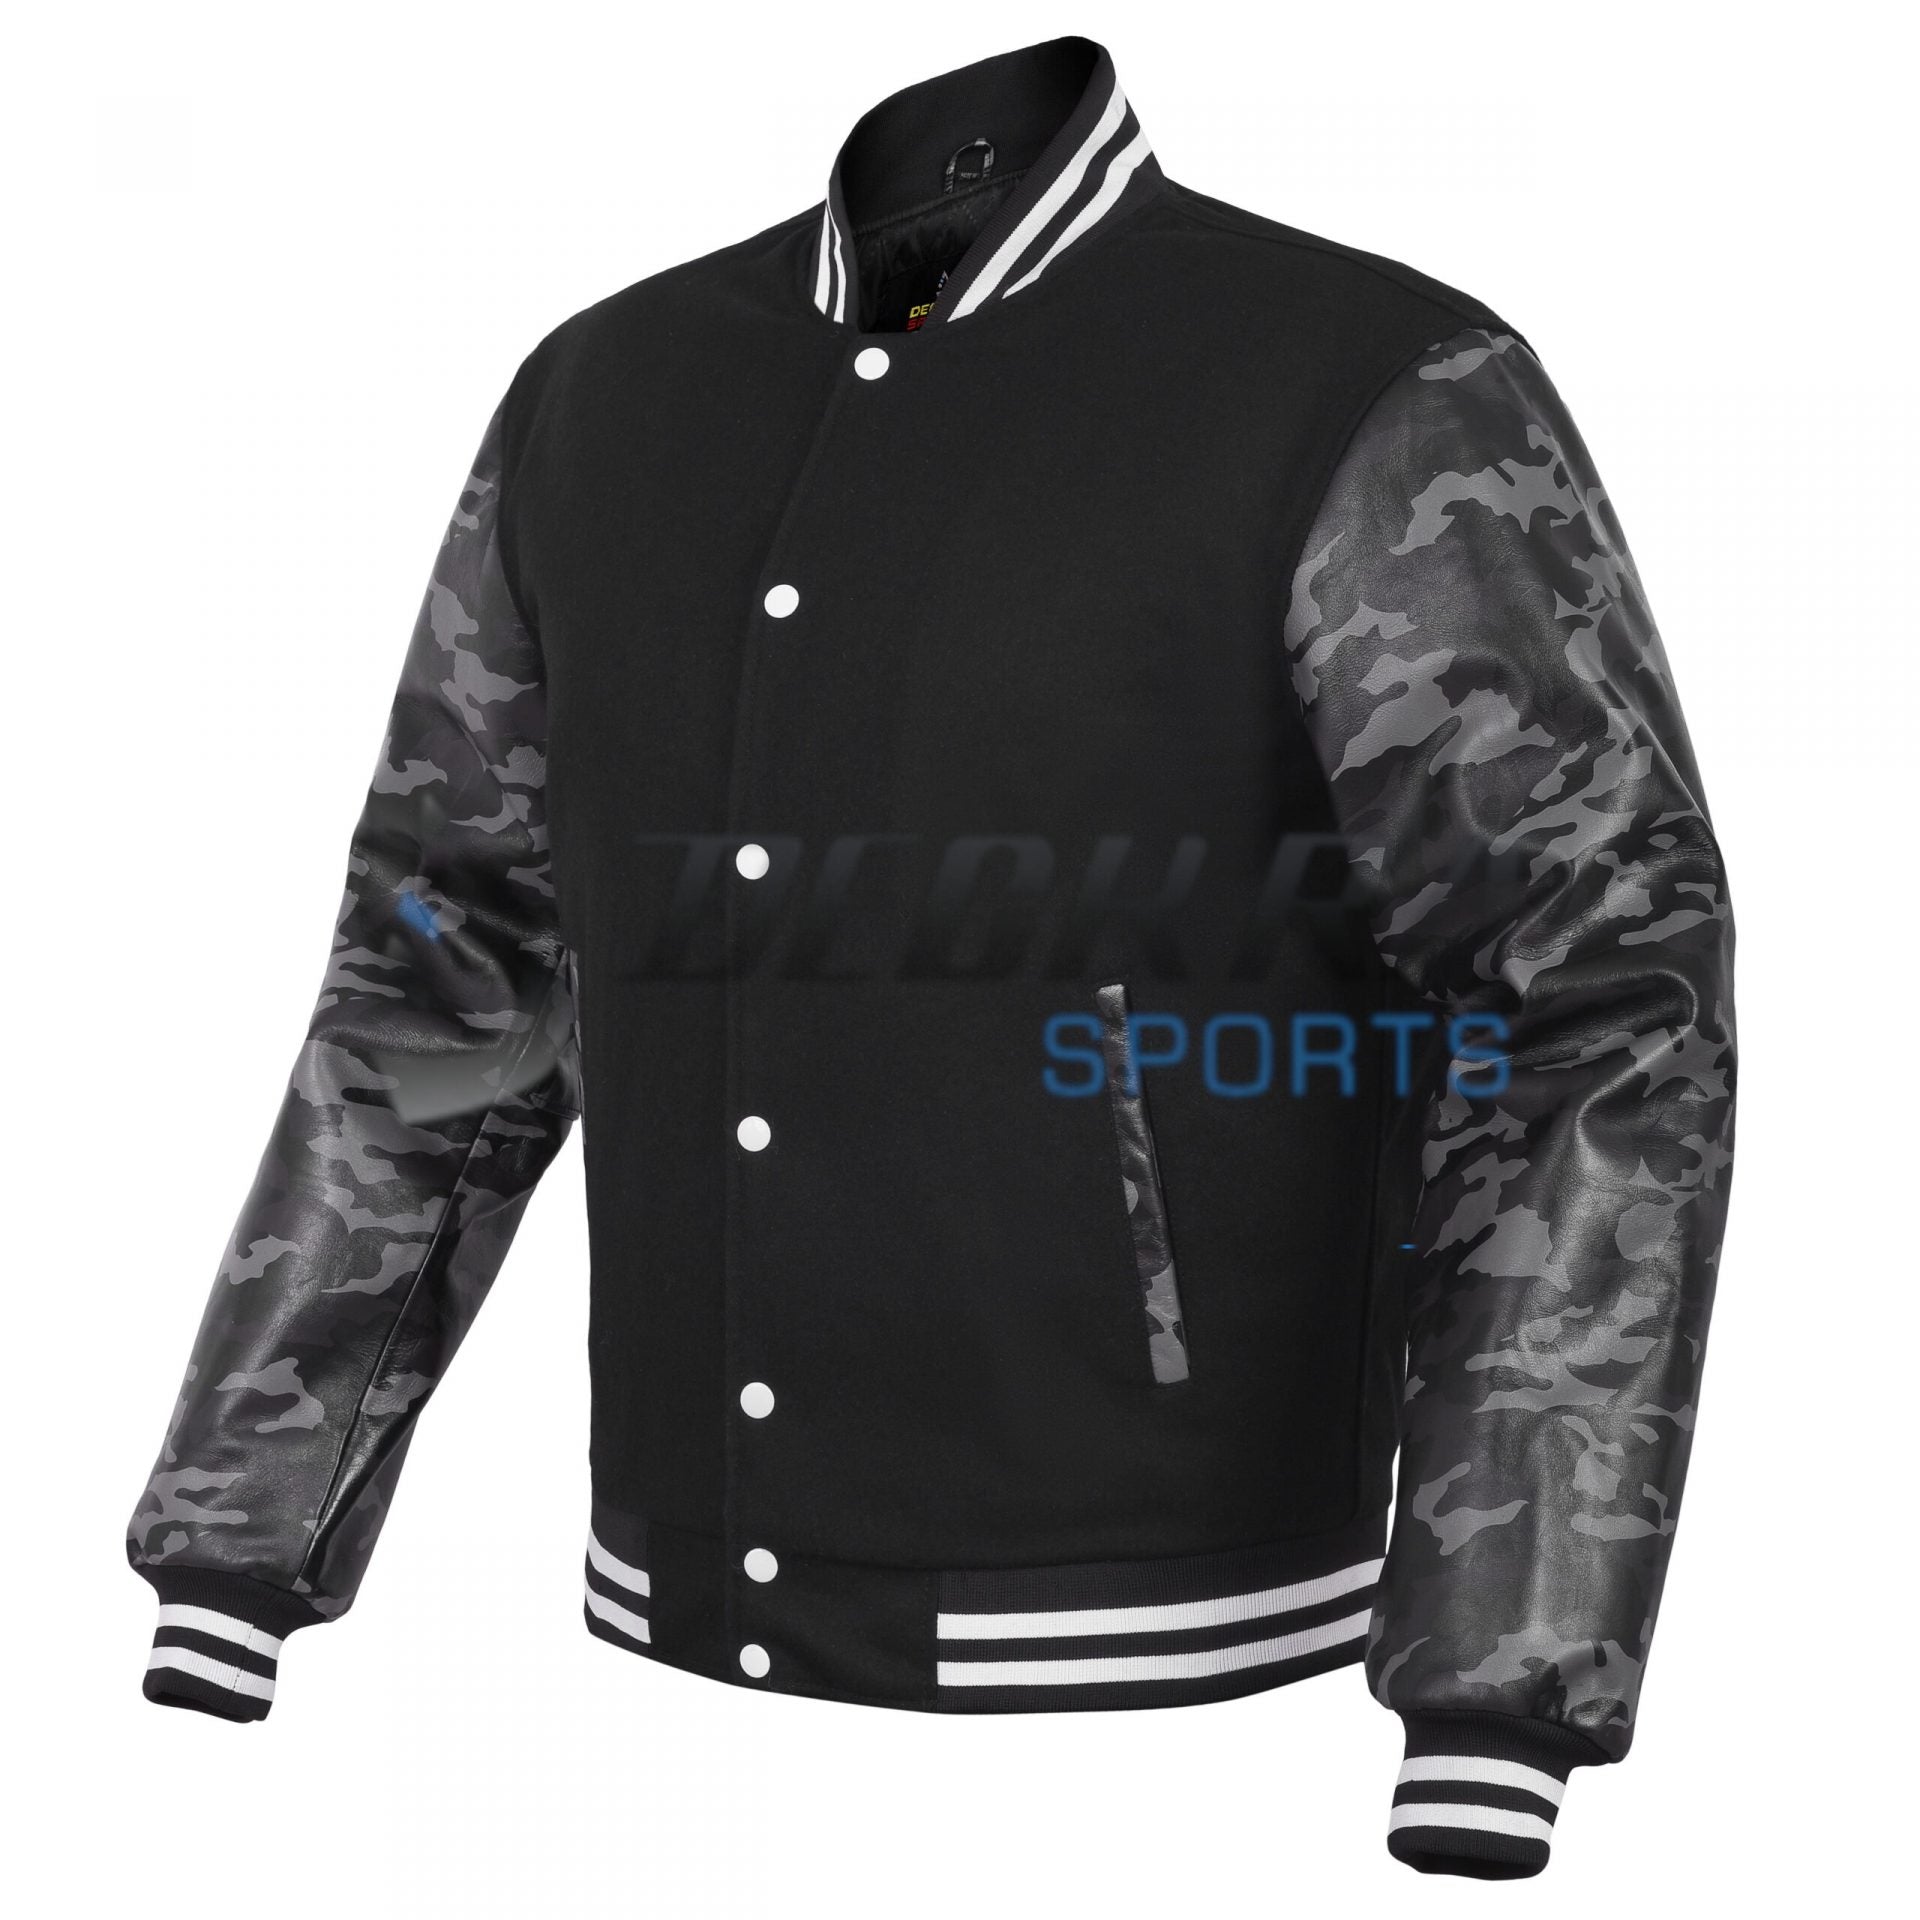 Deckra Sports Men's Varsity Jacket Camo Printed Genuine Leather Sleeve and Wool Blend Letterman Boys College Varsity Jackets XXS-5XL 4XL